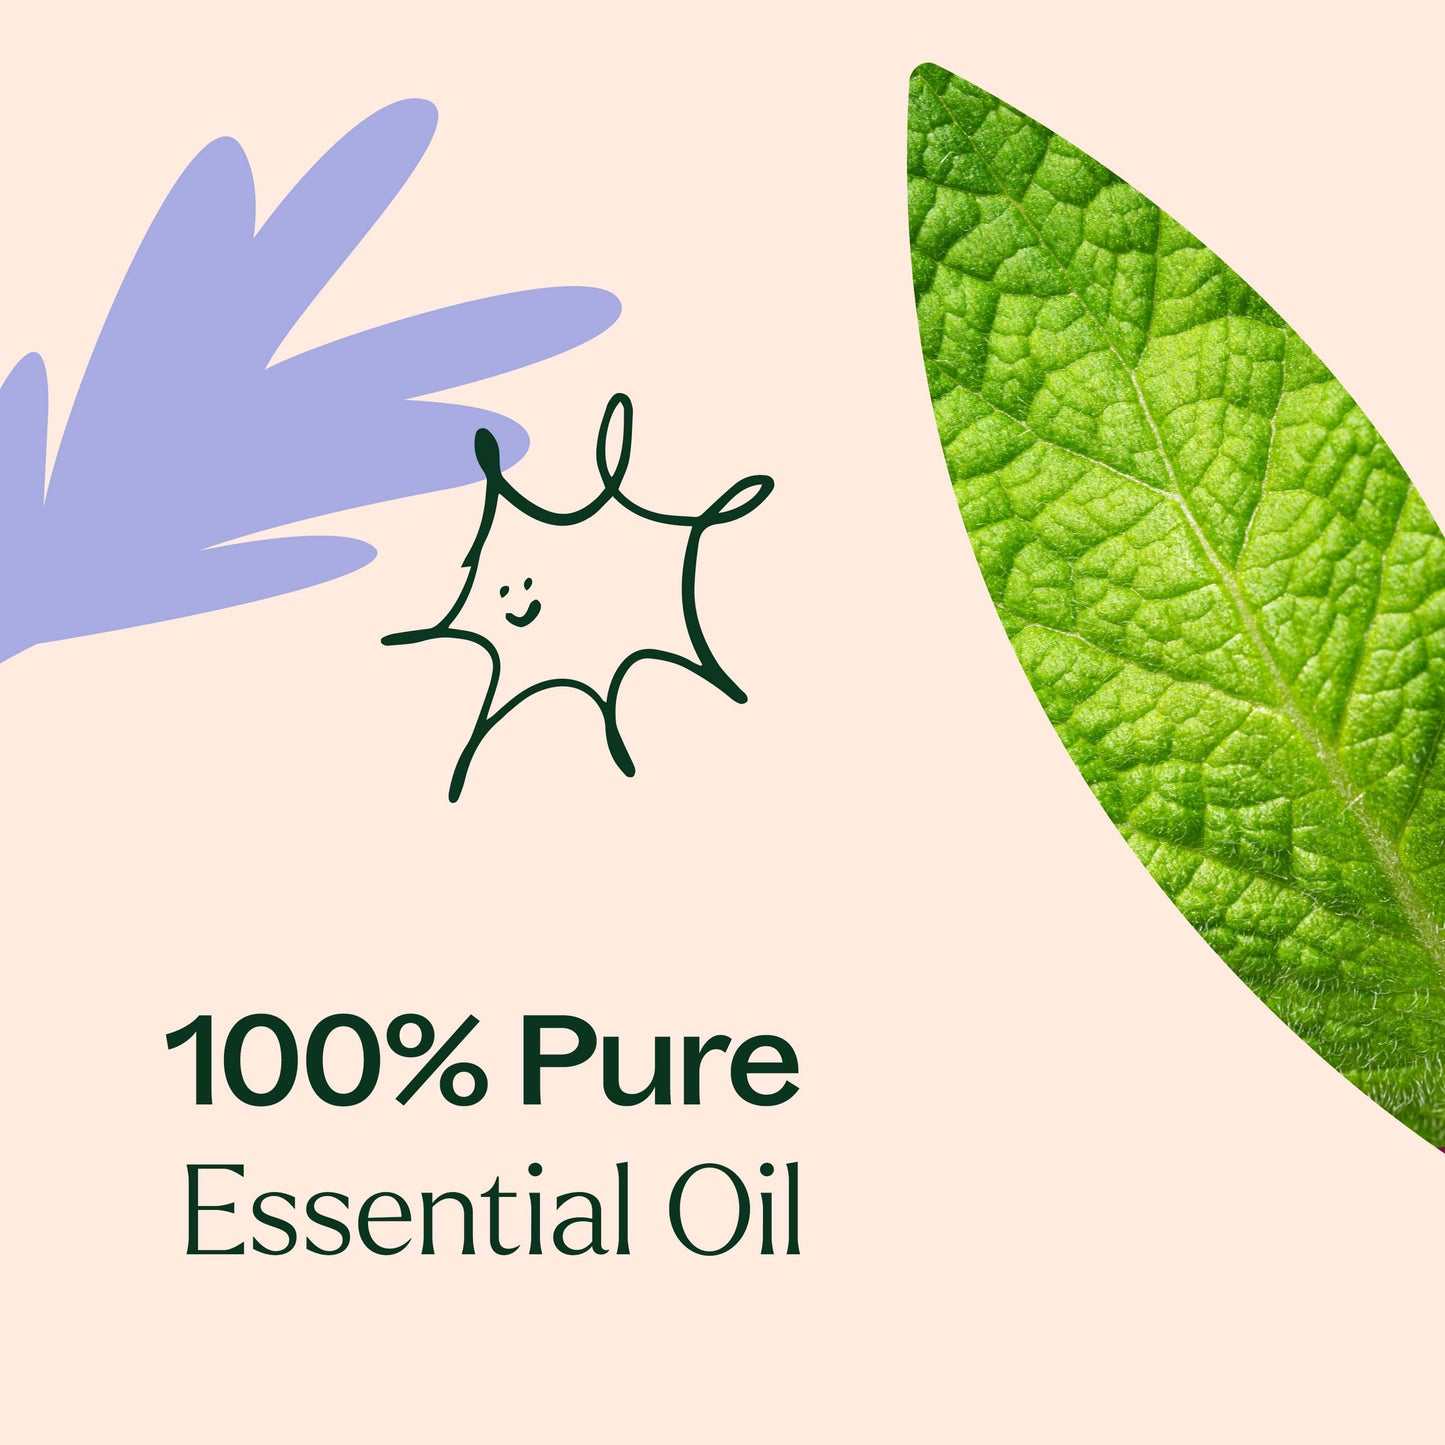 Respir Aid Essential Oil Blend is 100% pure 